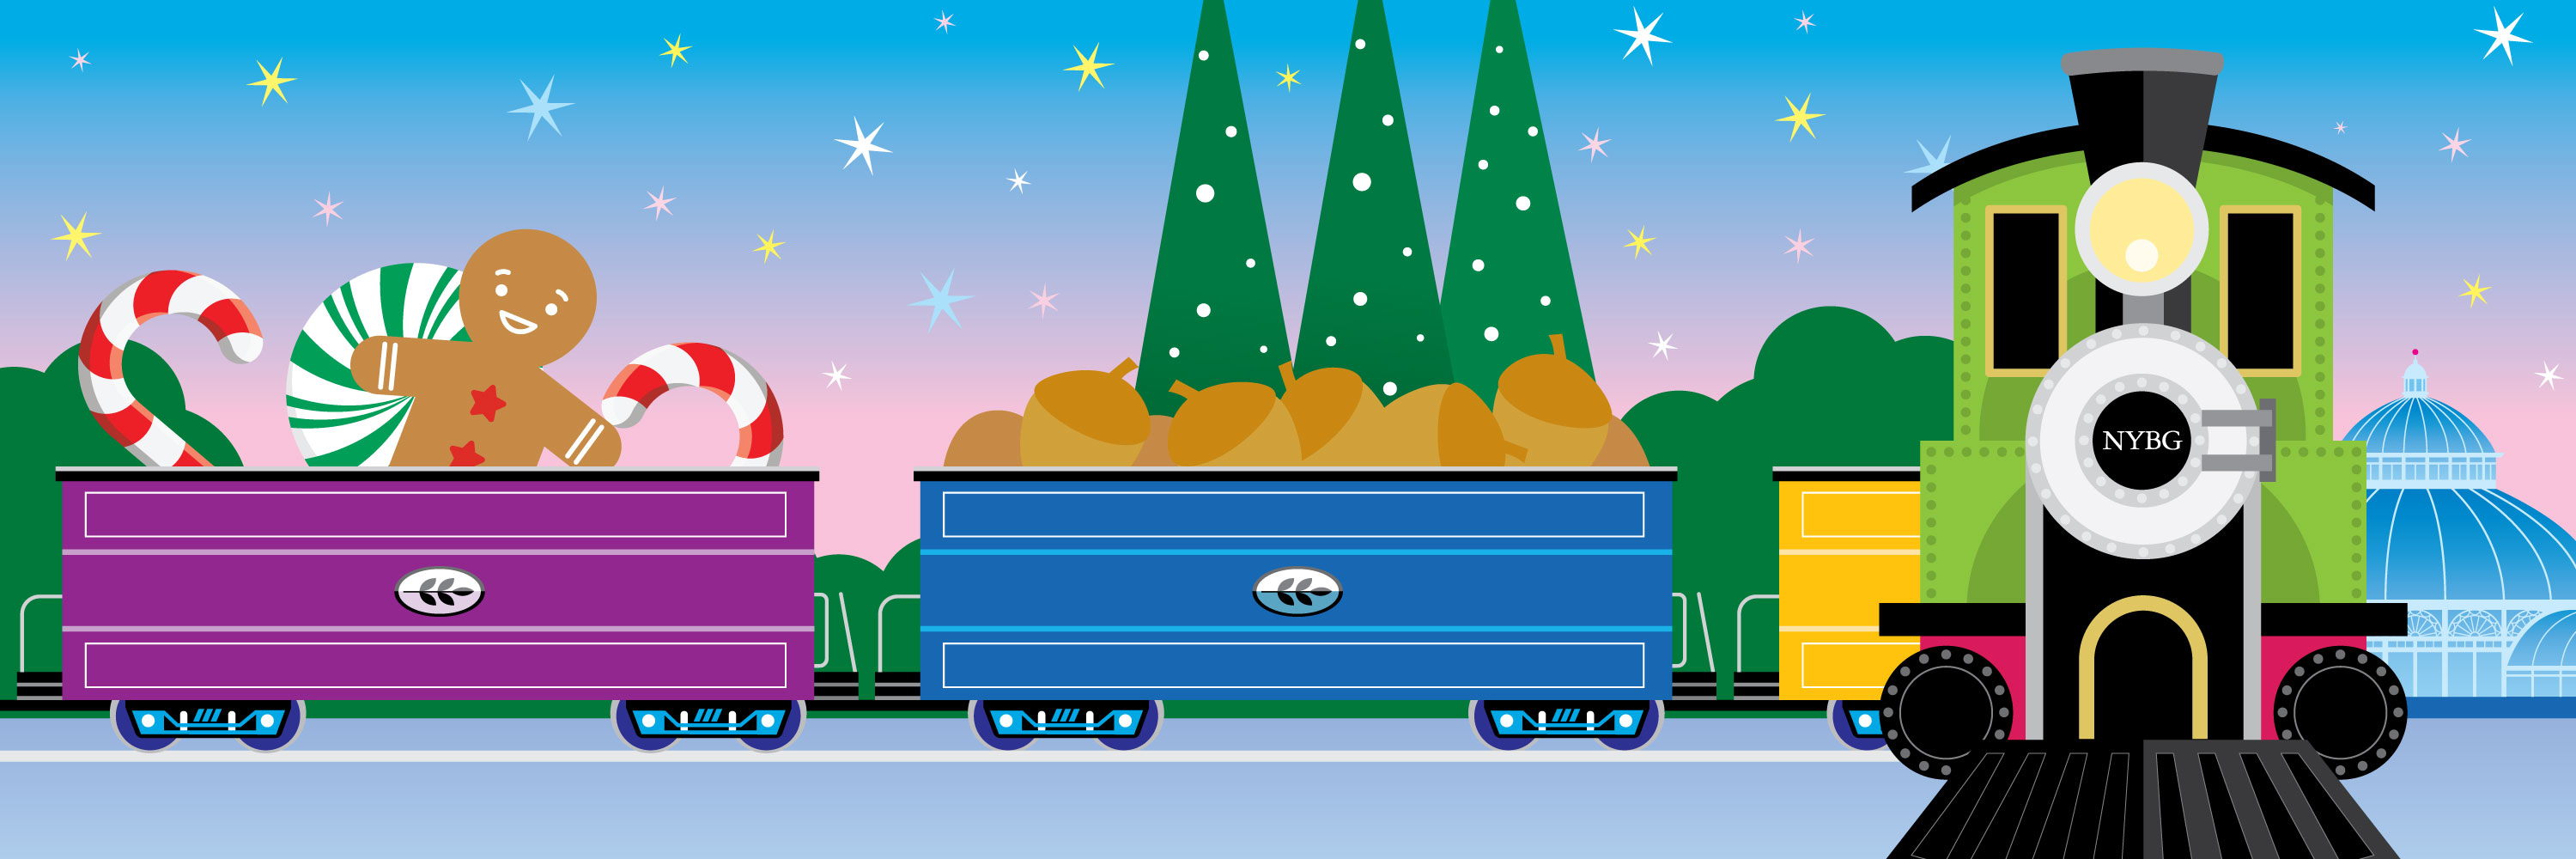 Illustration of a green steam locomotive